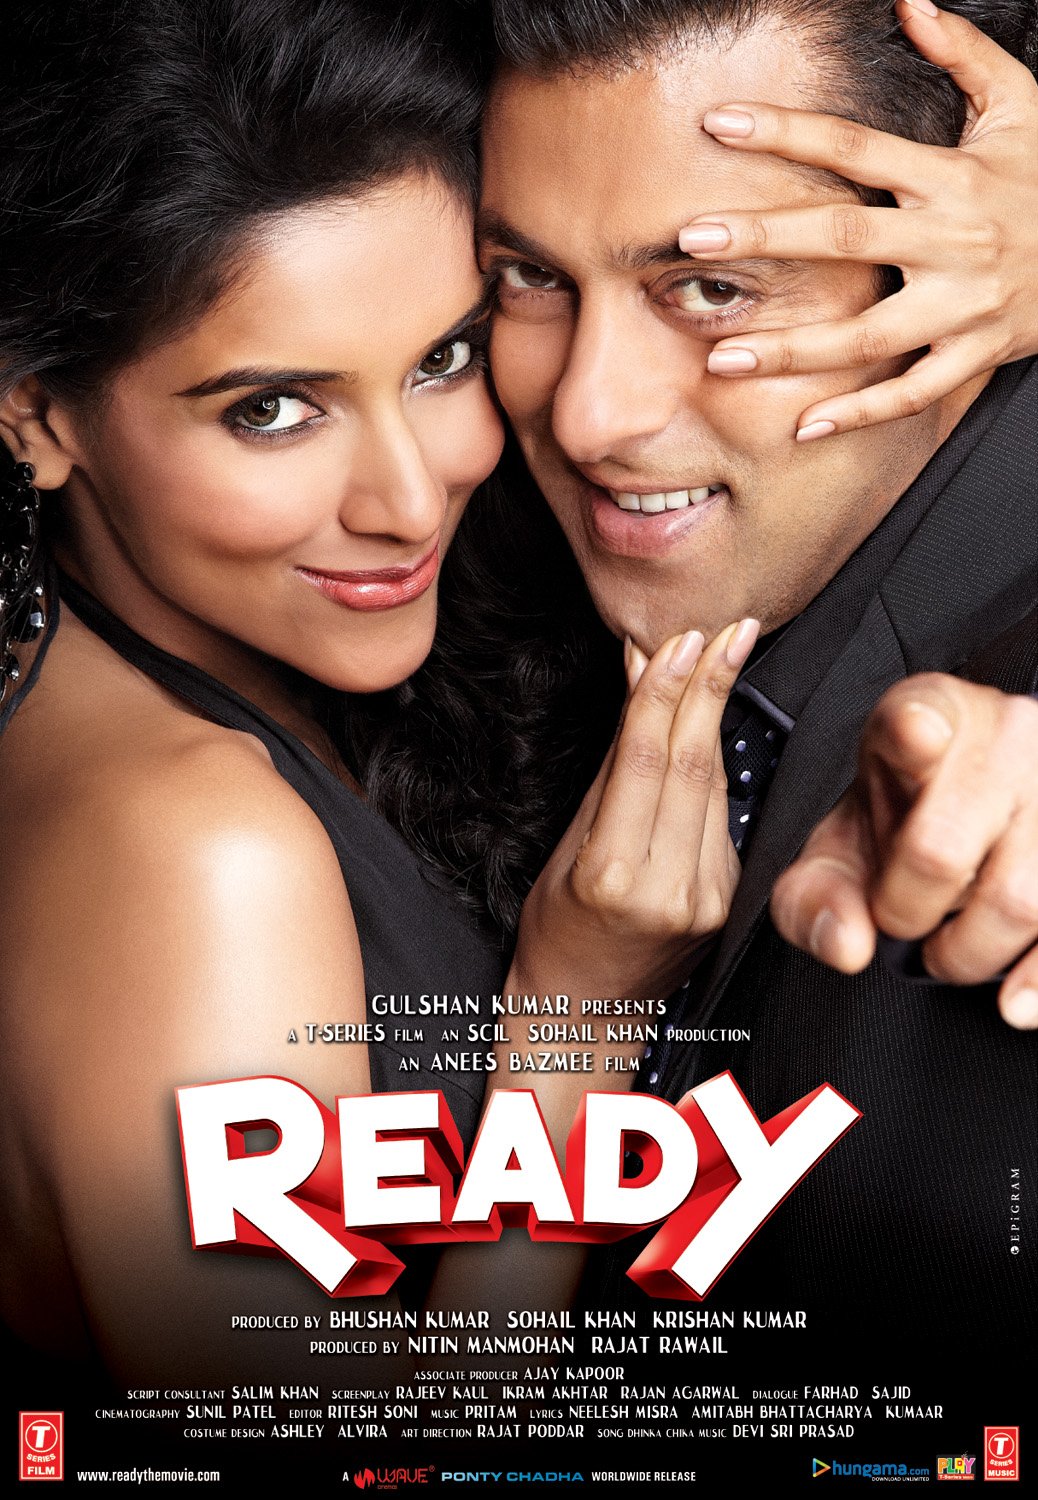 Dowanload Ready (2011) 720p HDRip Full Hindi Movie [1.3GB]